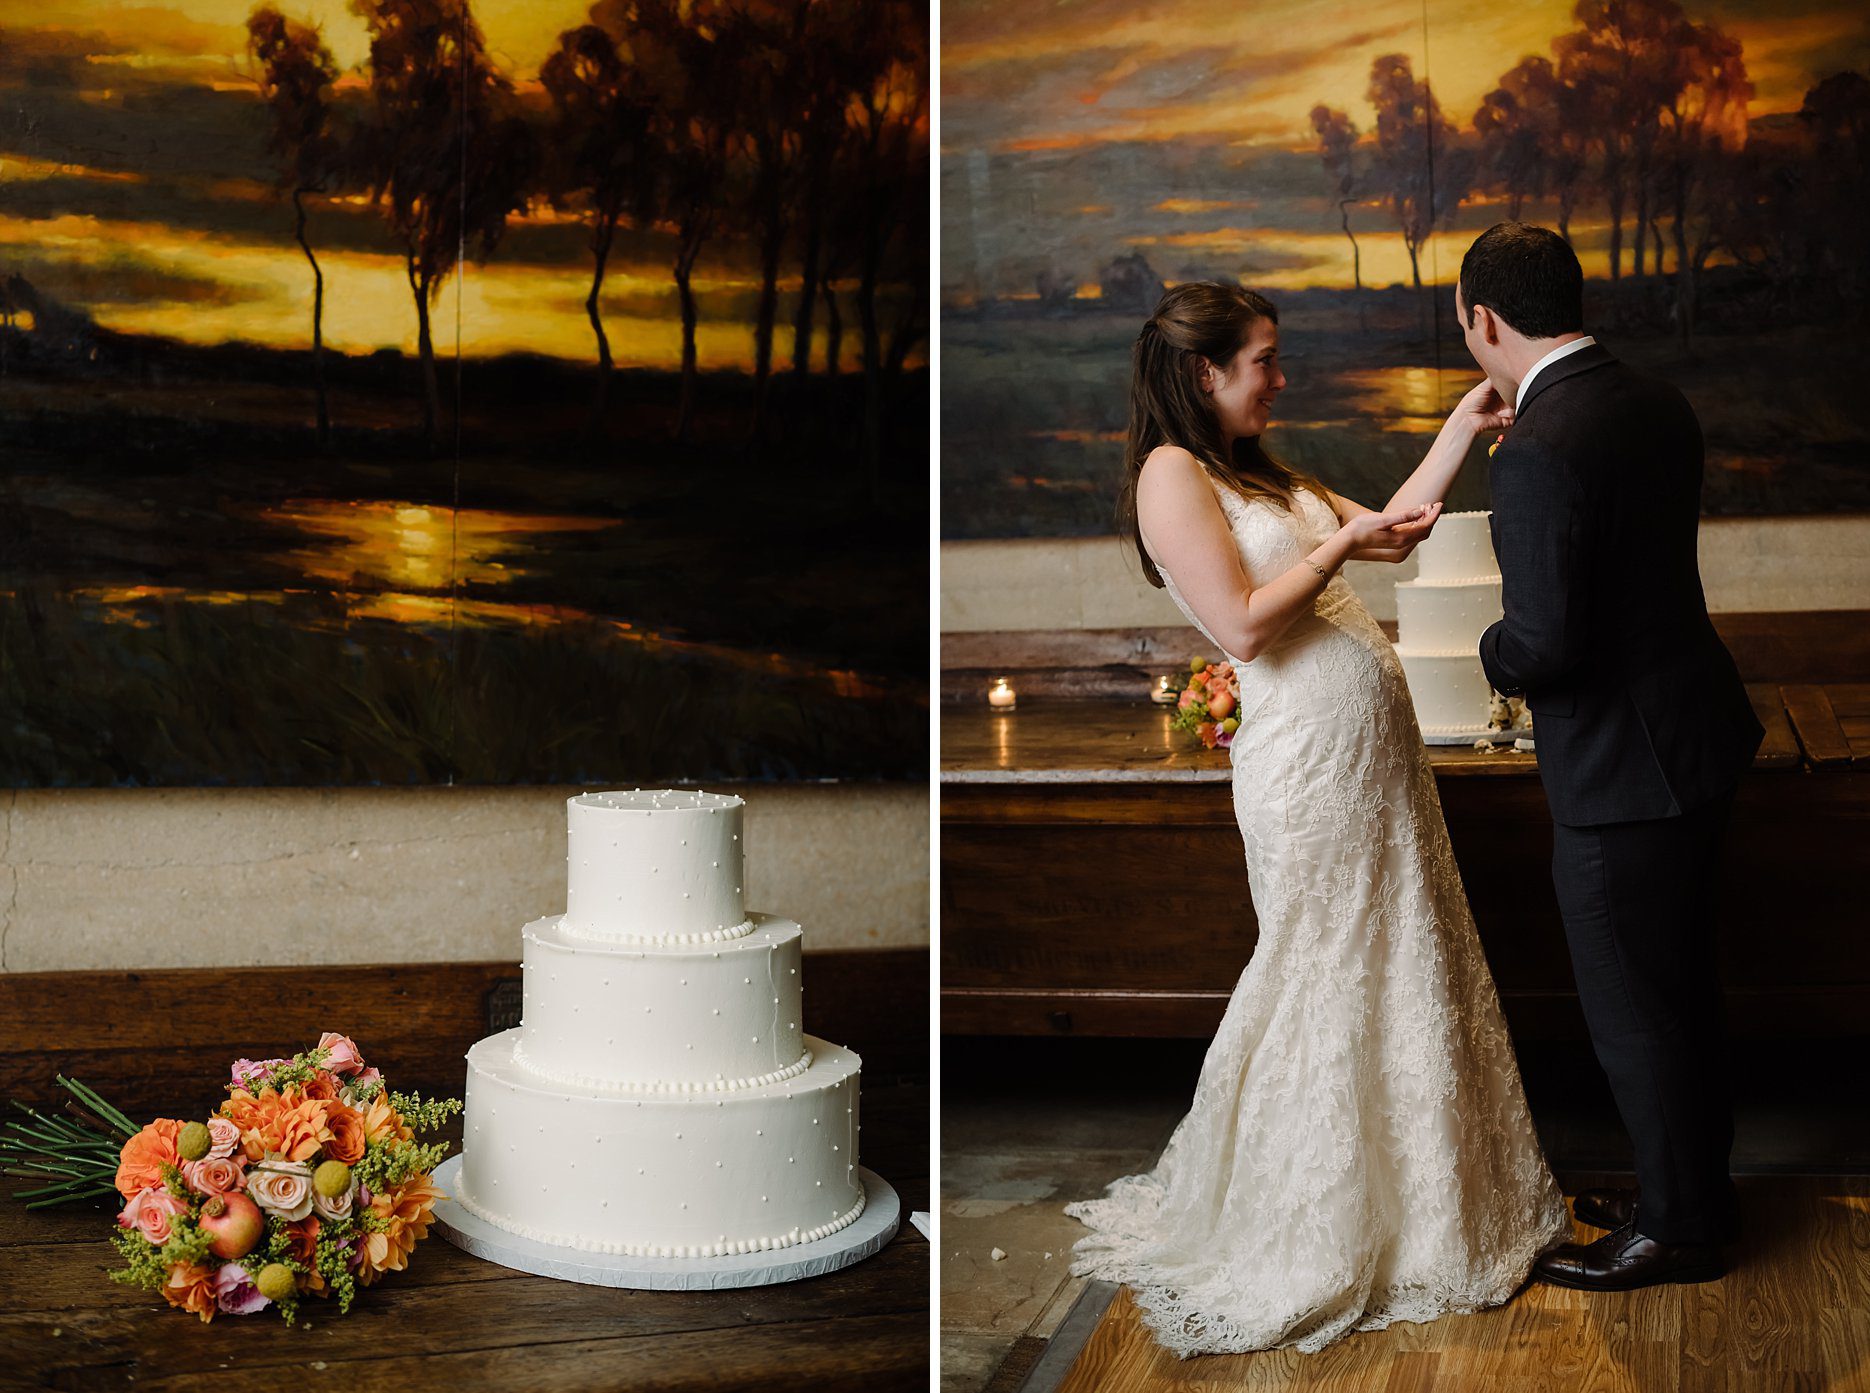 Wedding Cake, Jewish Wedding, Ramekins Sonoma, Bride and Groom, Lauren Miller Events, Sonoma Wedding Photographer